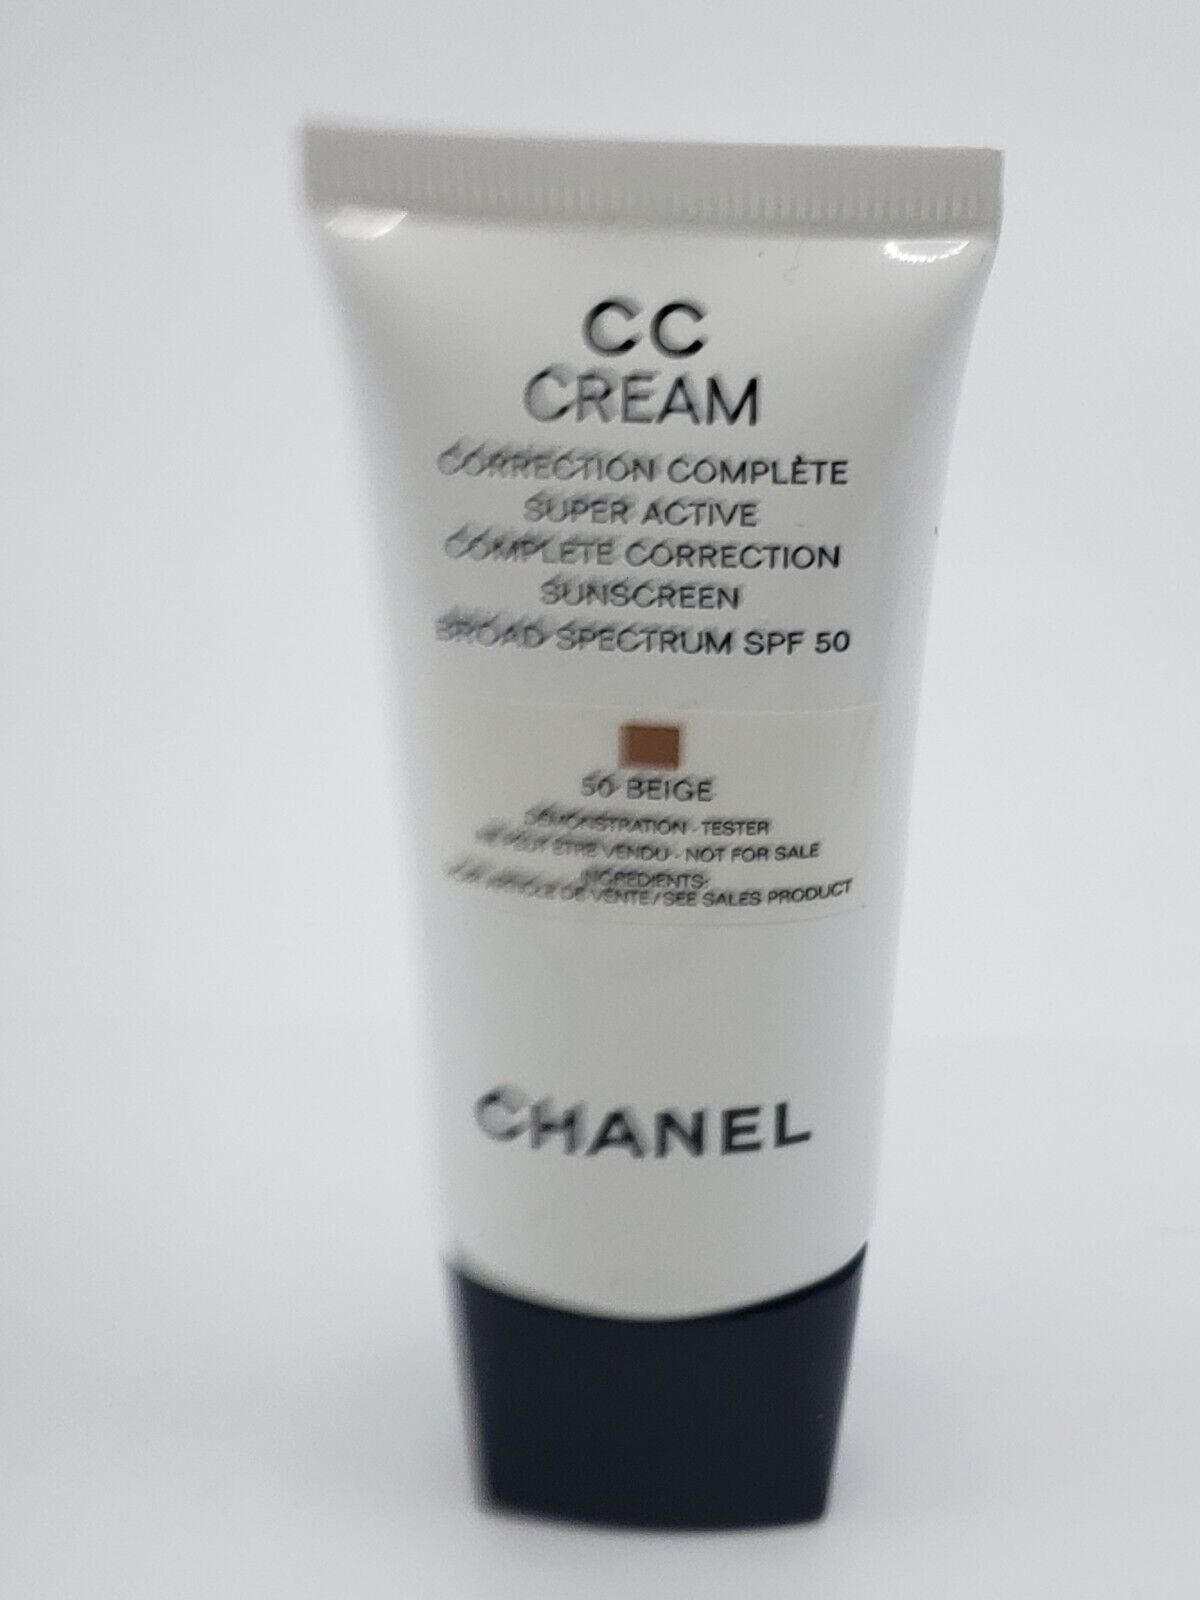 chanel 60 beige CC CREAM Super Active Complete Correction Sunscreen SPF 50 1 oz